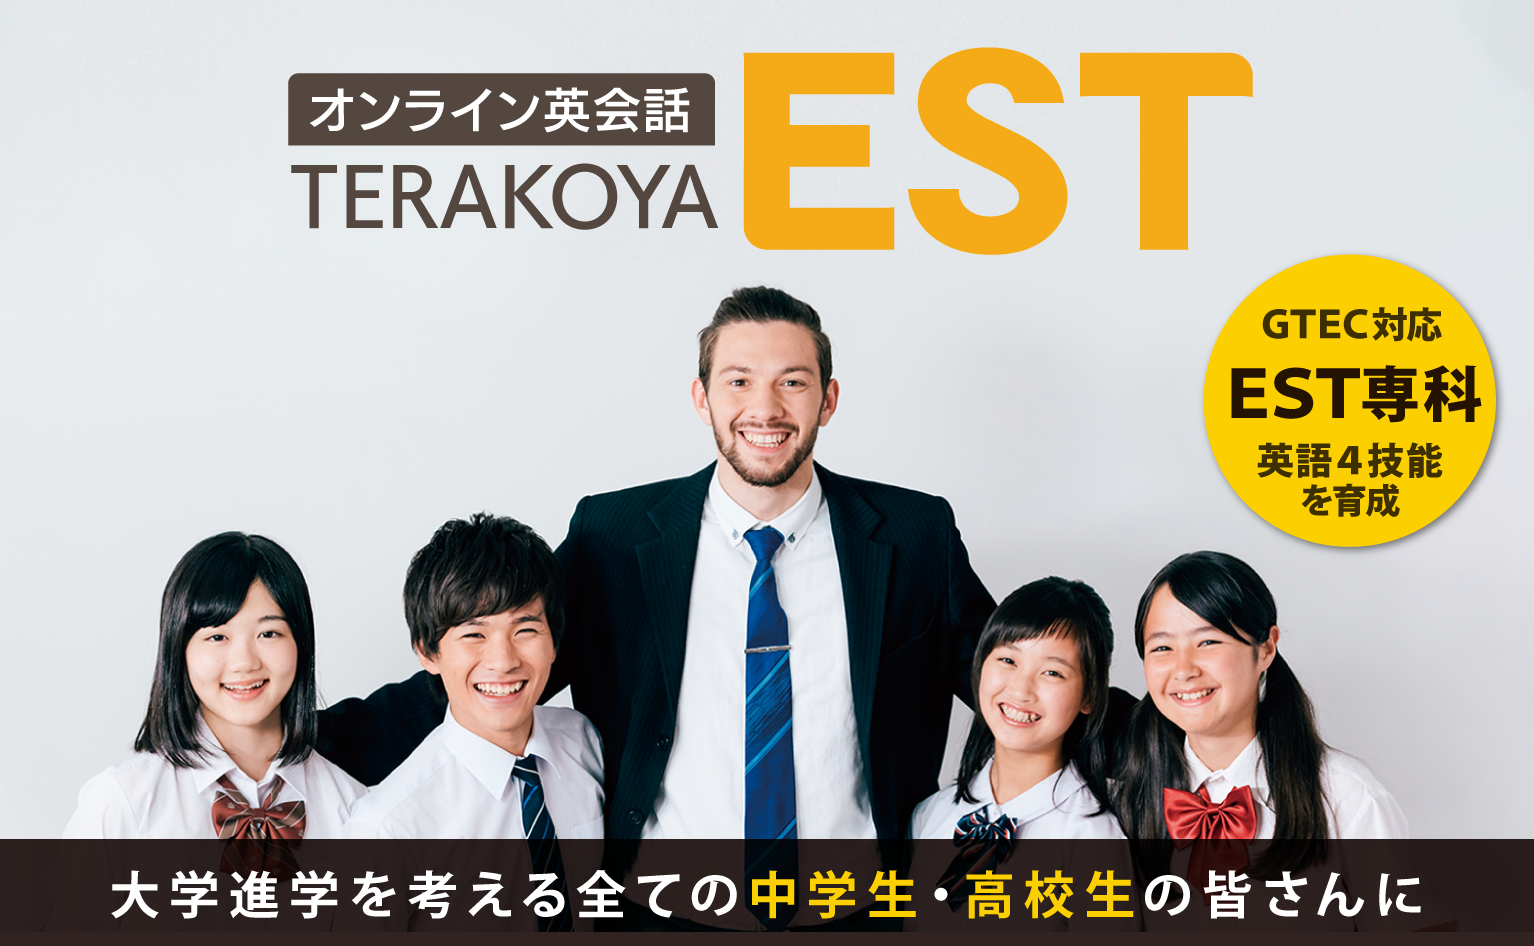 GTECに対応し、英語４技能を育成する「EST専科」